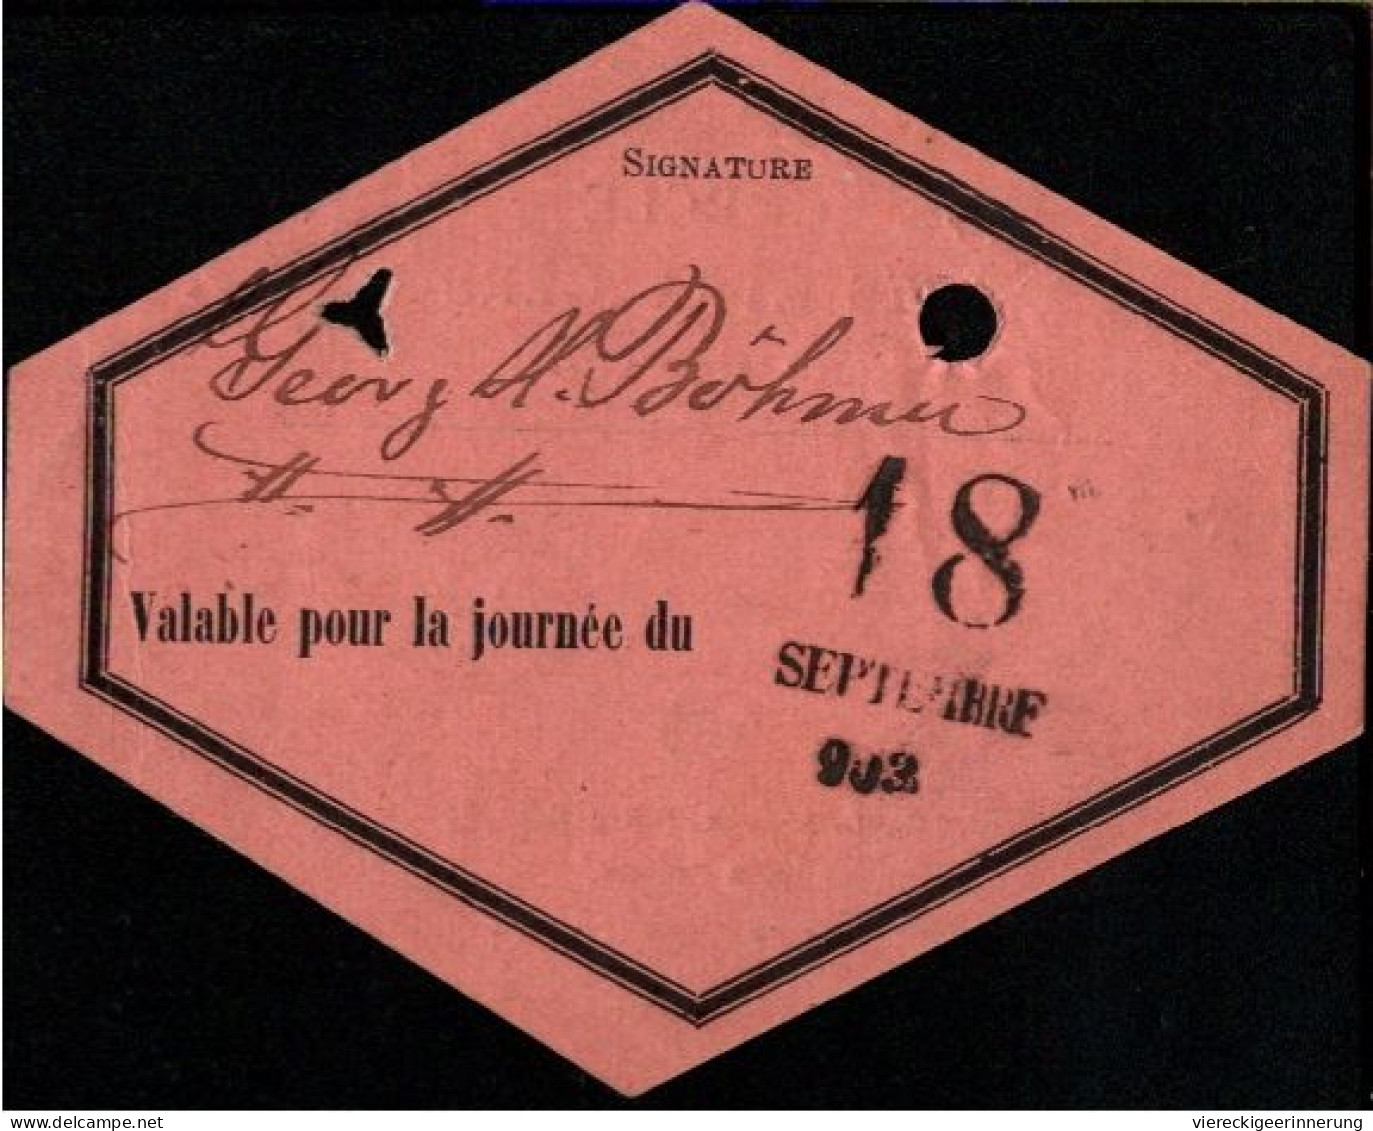 ! 1903 Cercle Des Etrangers De Monaco, Mitgliedskarte, Ausweis - Briefe U. Dokumente